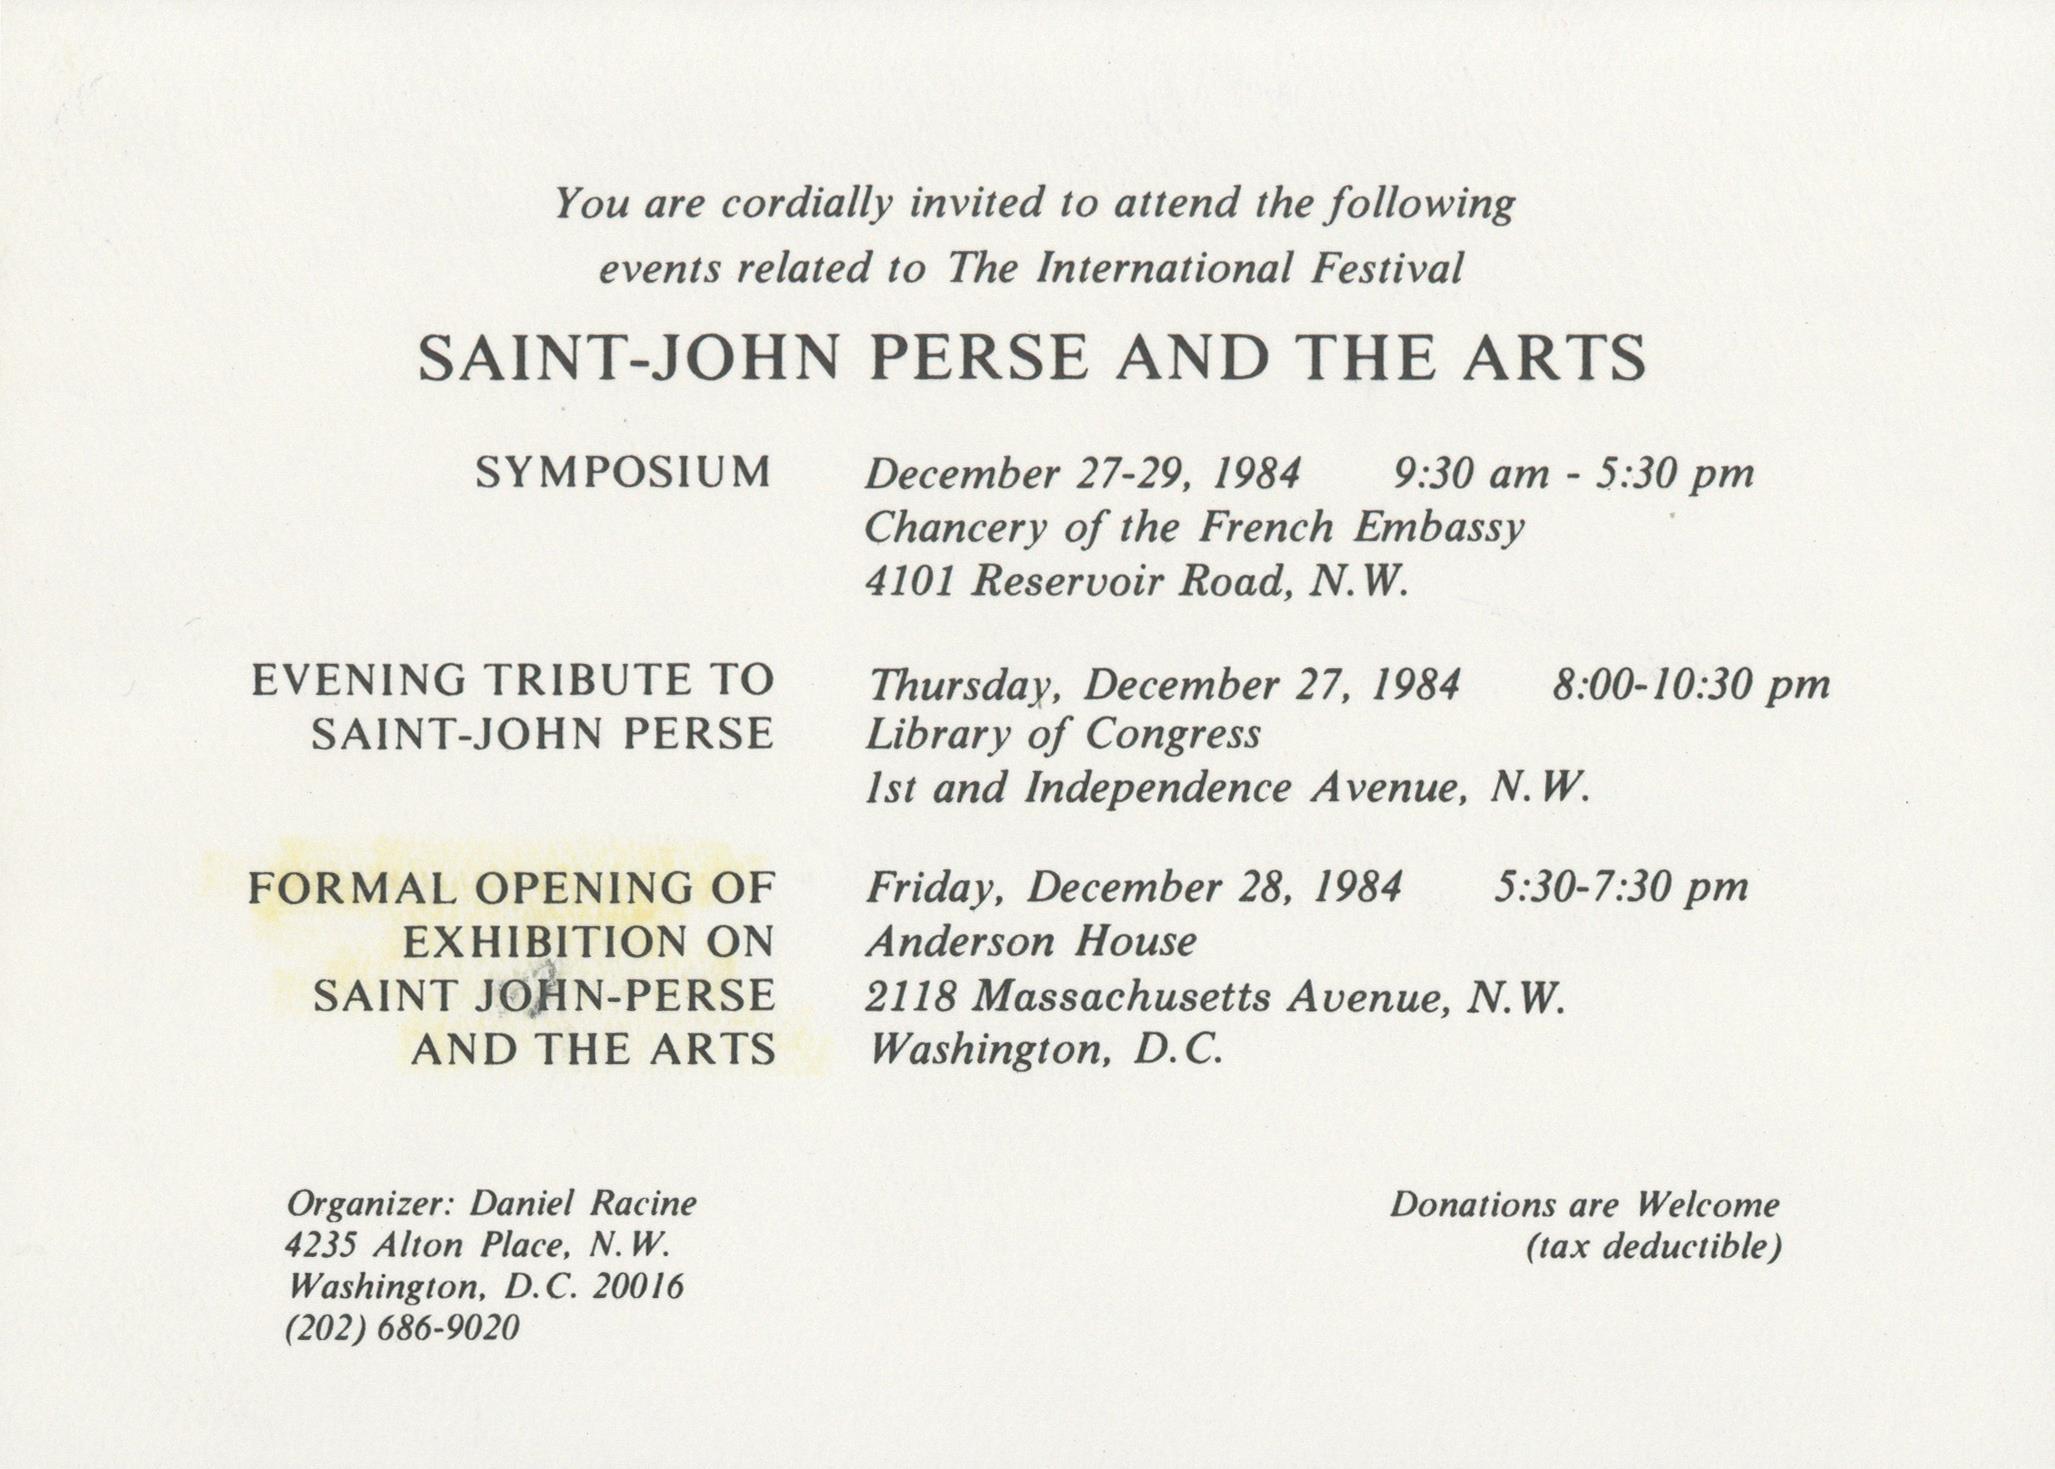 Saint-John Perse and the Arts [colóquio]